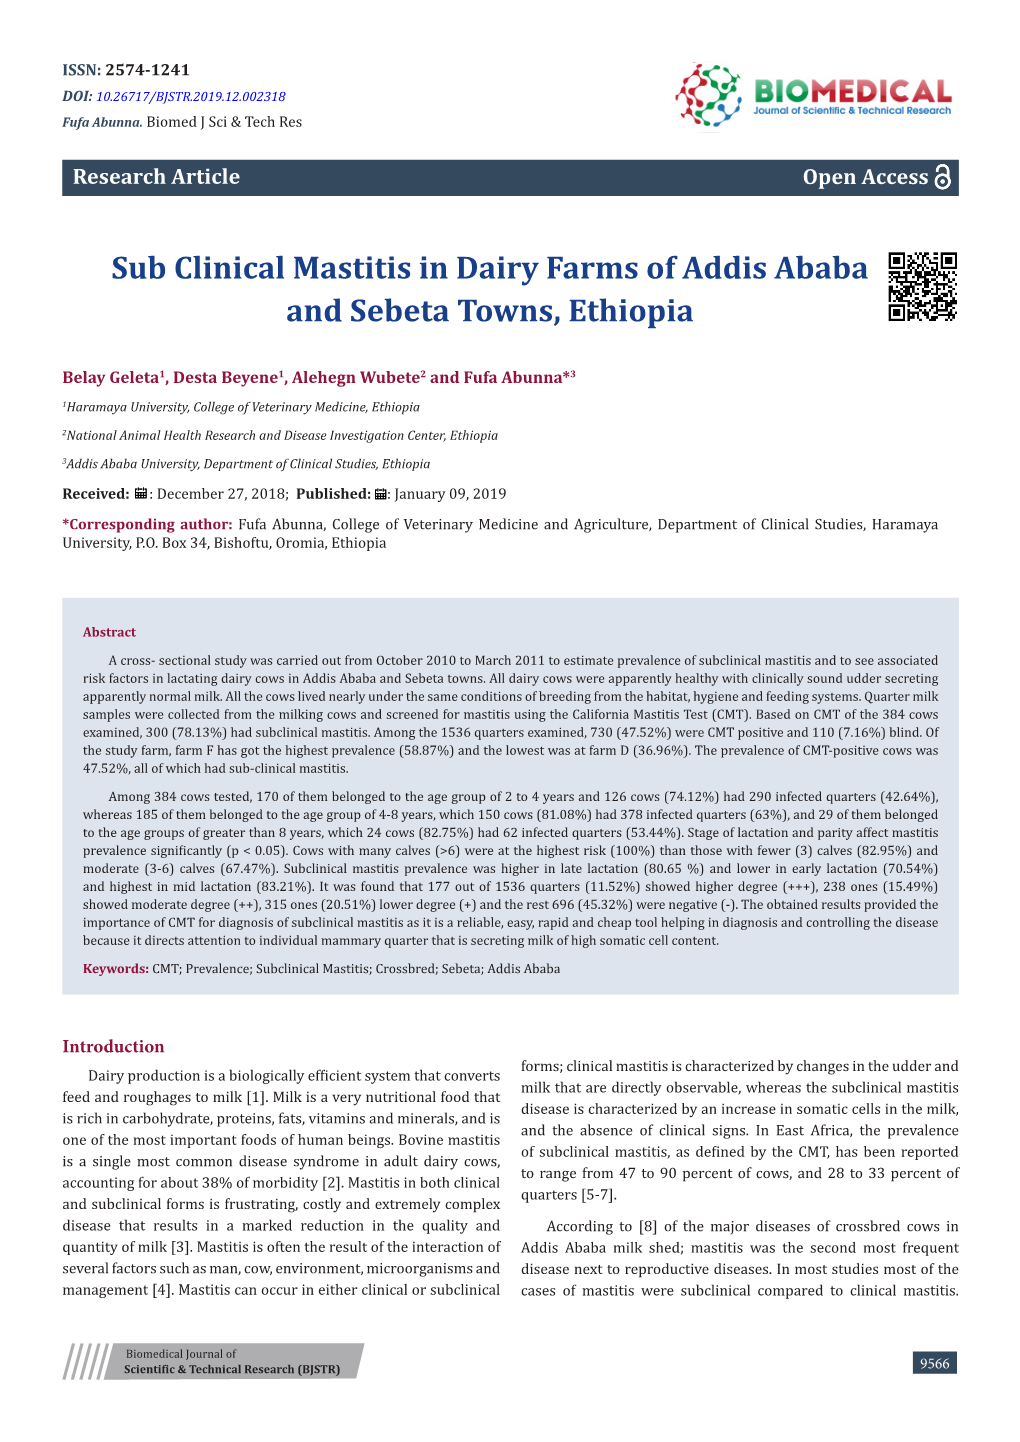 Sub Clinical Mastitis in Dairy Farms of Addis Ababa and Sebeta Towns, Ethiopia